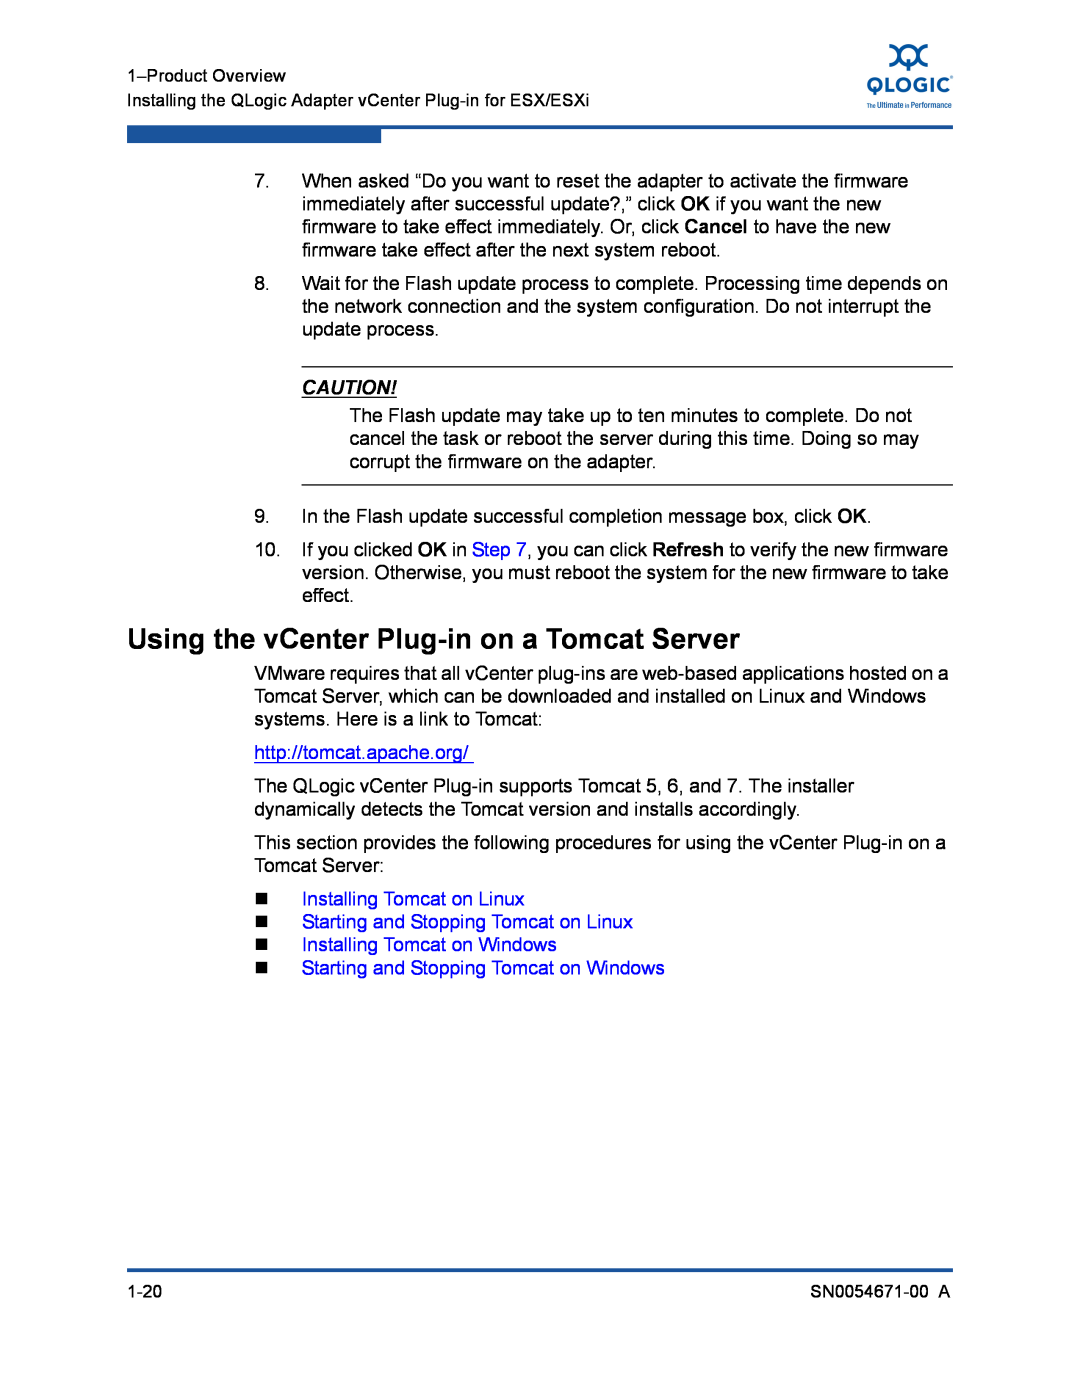 Q-Logic 8200, 3200 Using the vCenter Plug-in on a Tomcat Server, http//tomcat.apache.org,  Installing Tomcat on Windows 